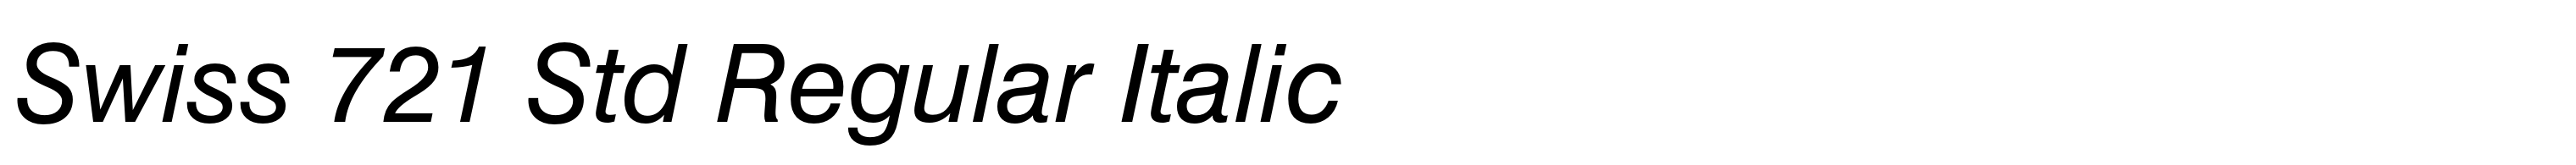 Swiss 721 Std Regular Italic